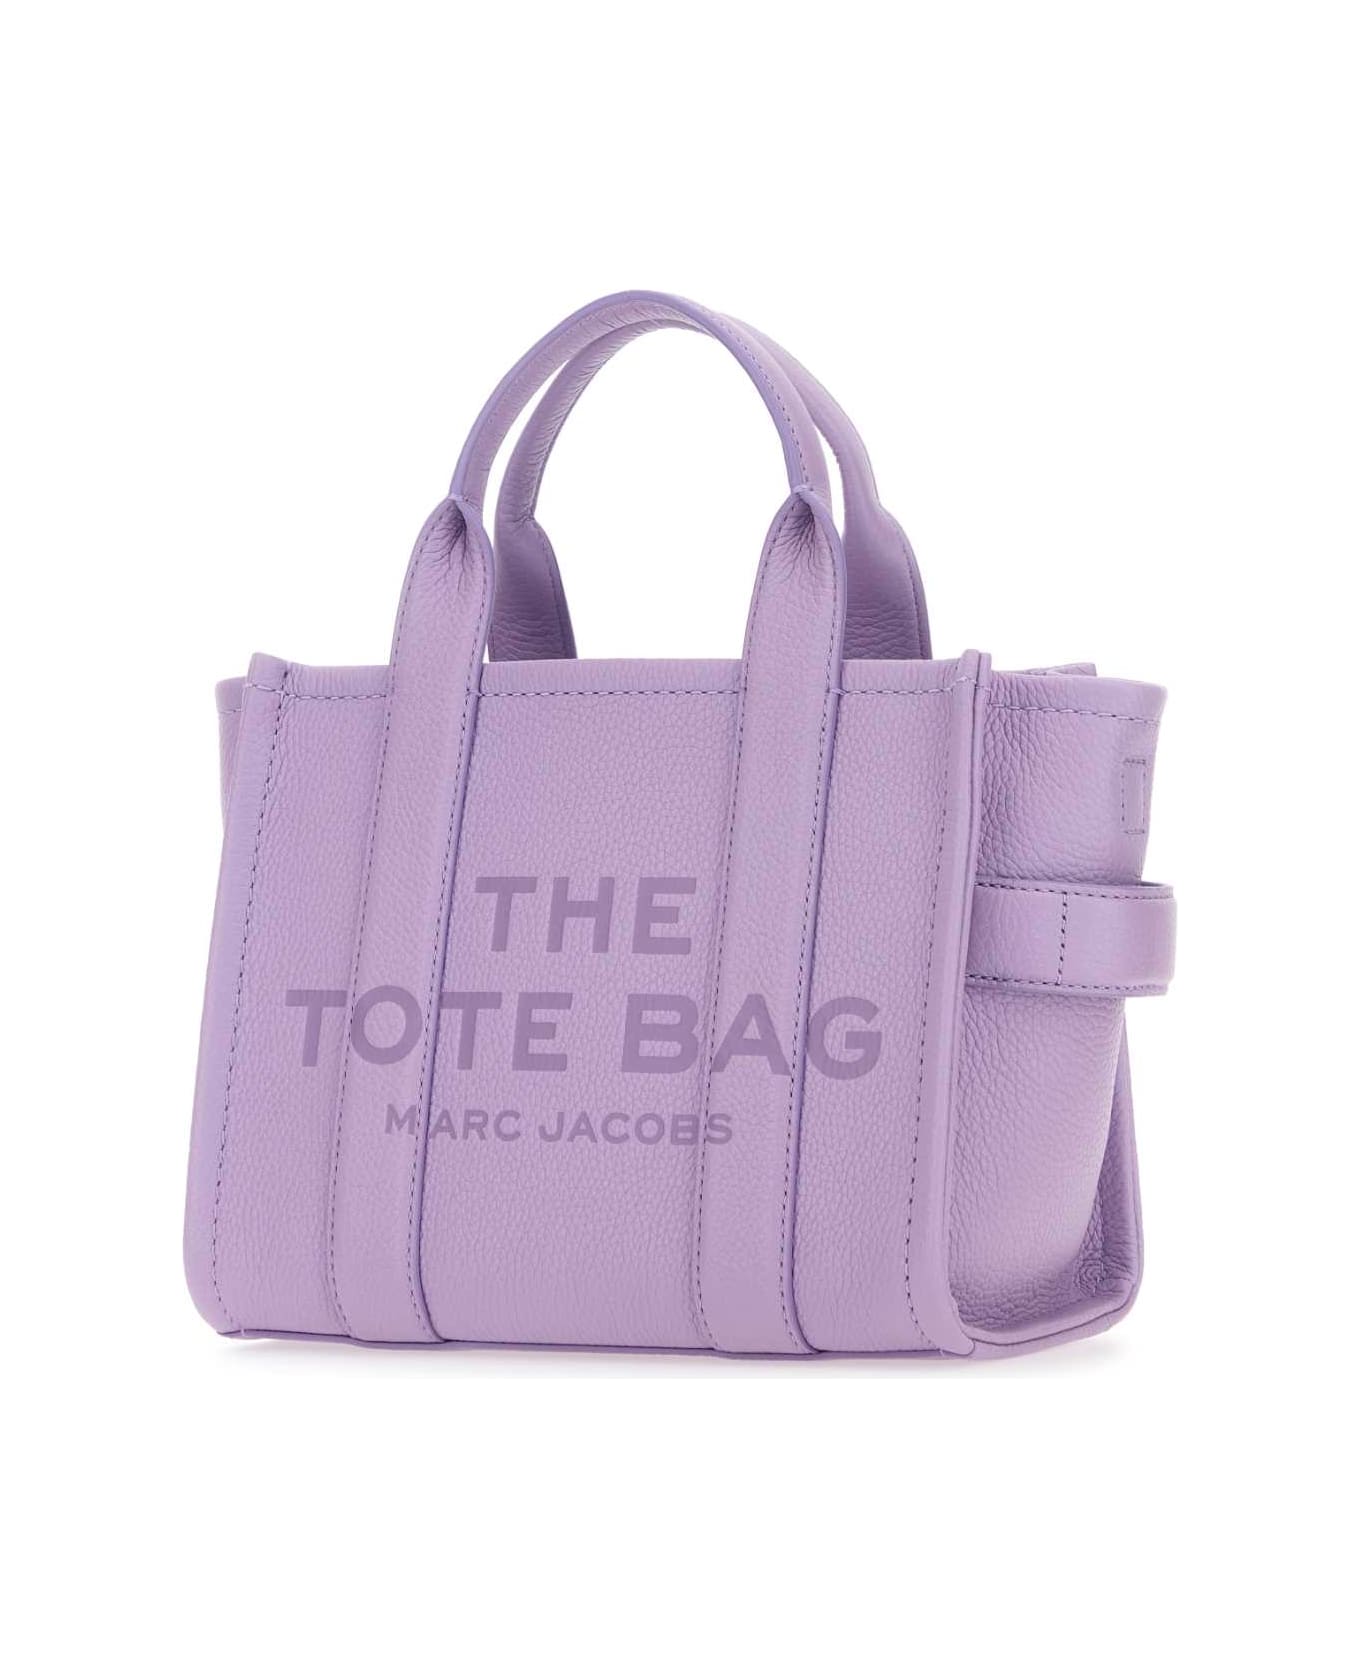 Marc Jacobs Lilac Leather Mini The Tote Bag Handbag - WISTERIA